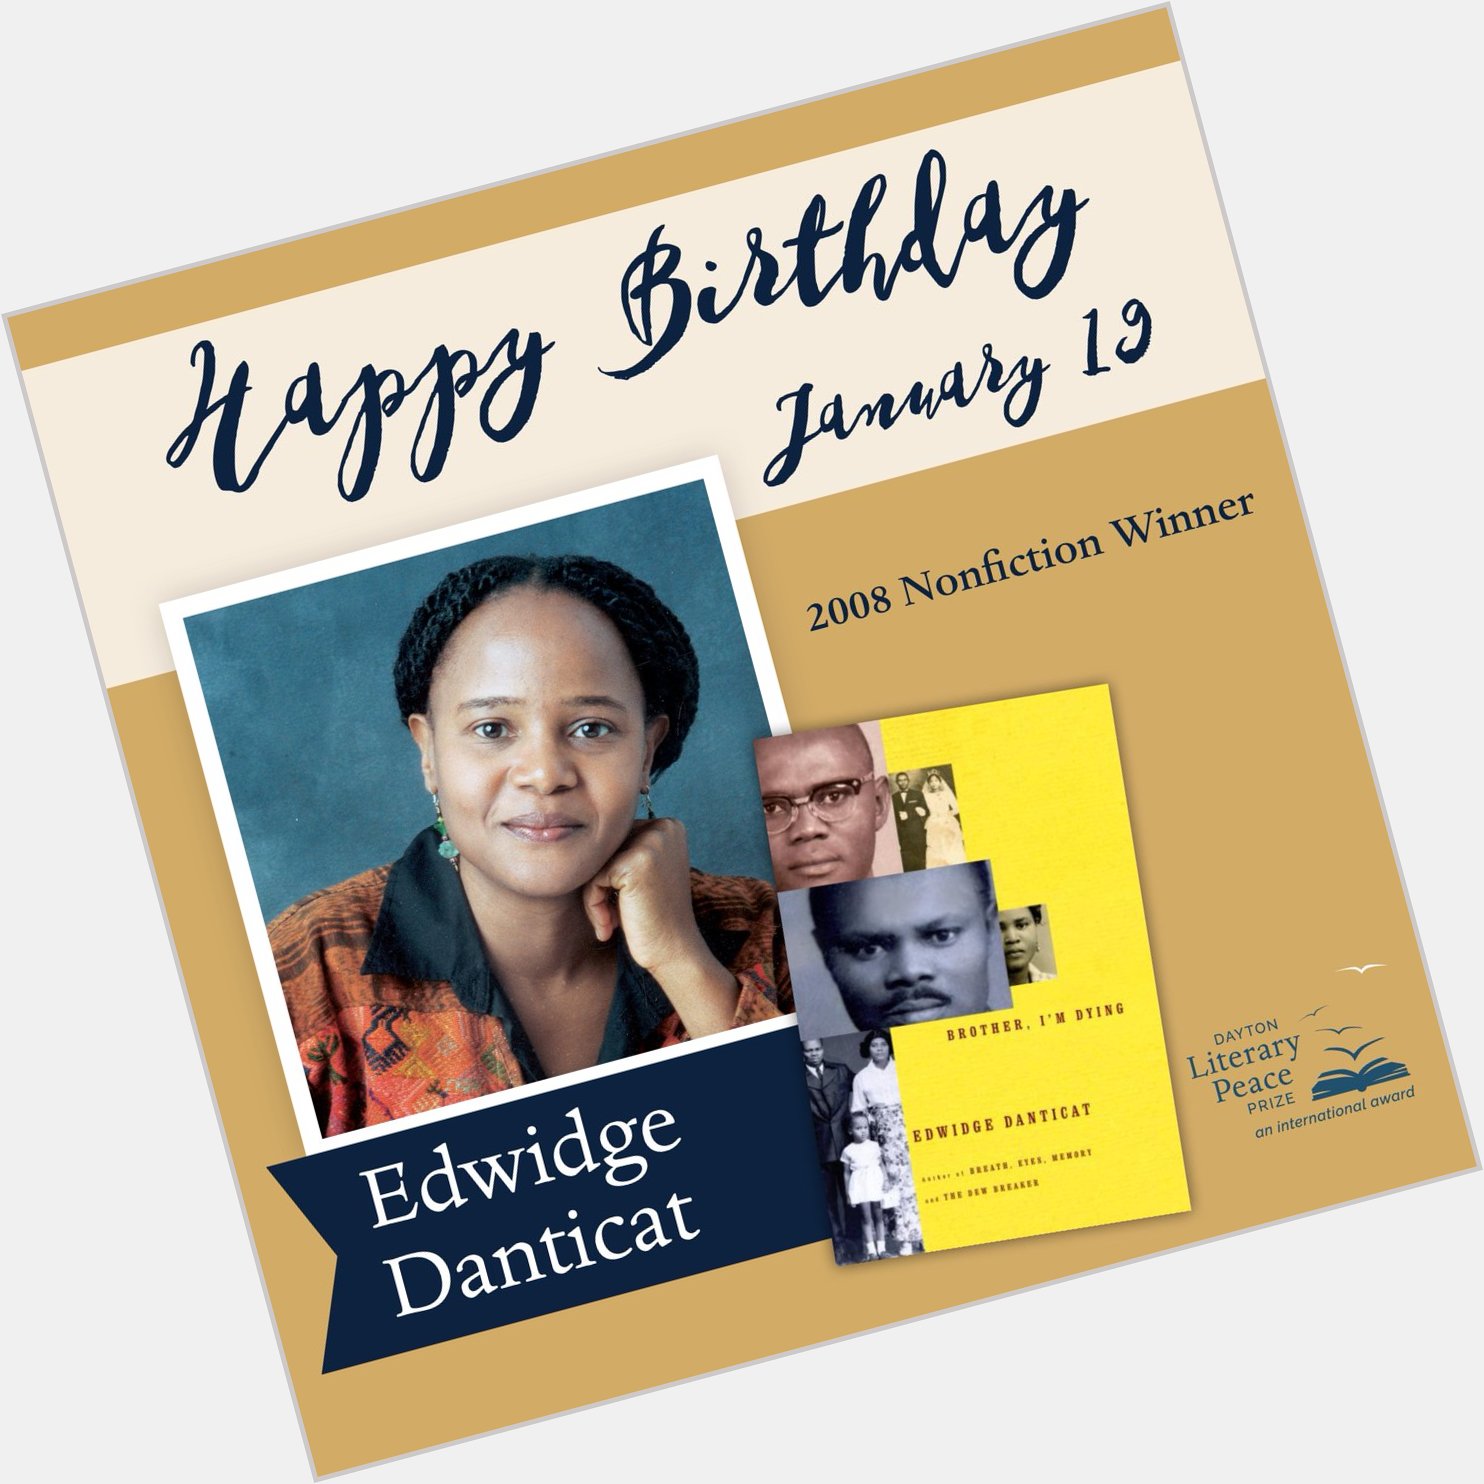 Happy Birthday to the Dayton Literary Peace Prize 2008 Nonfiction Winner Edwidge Danticat! 